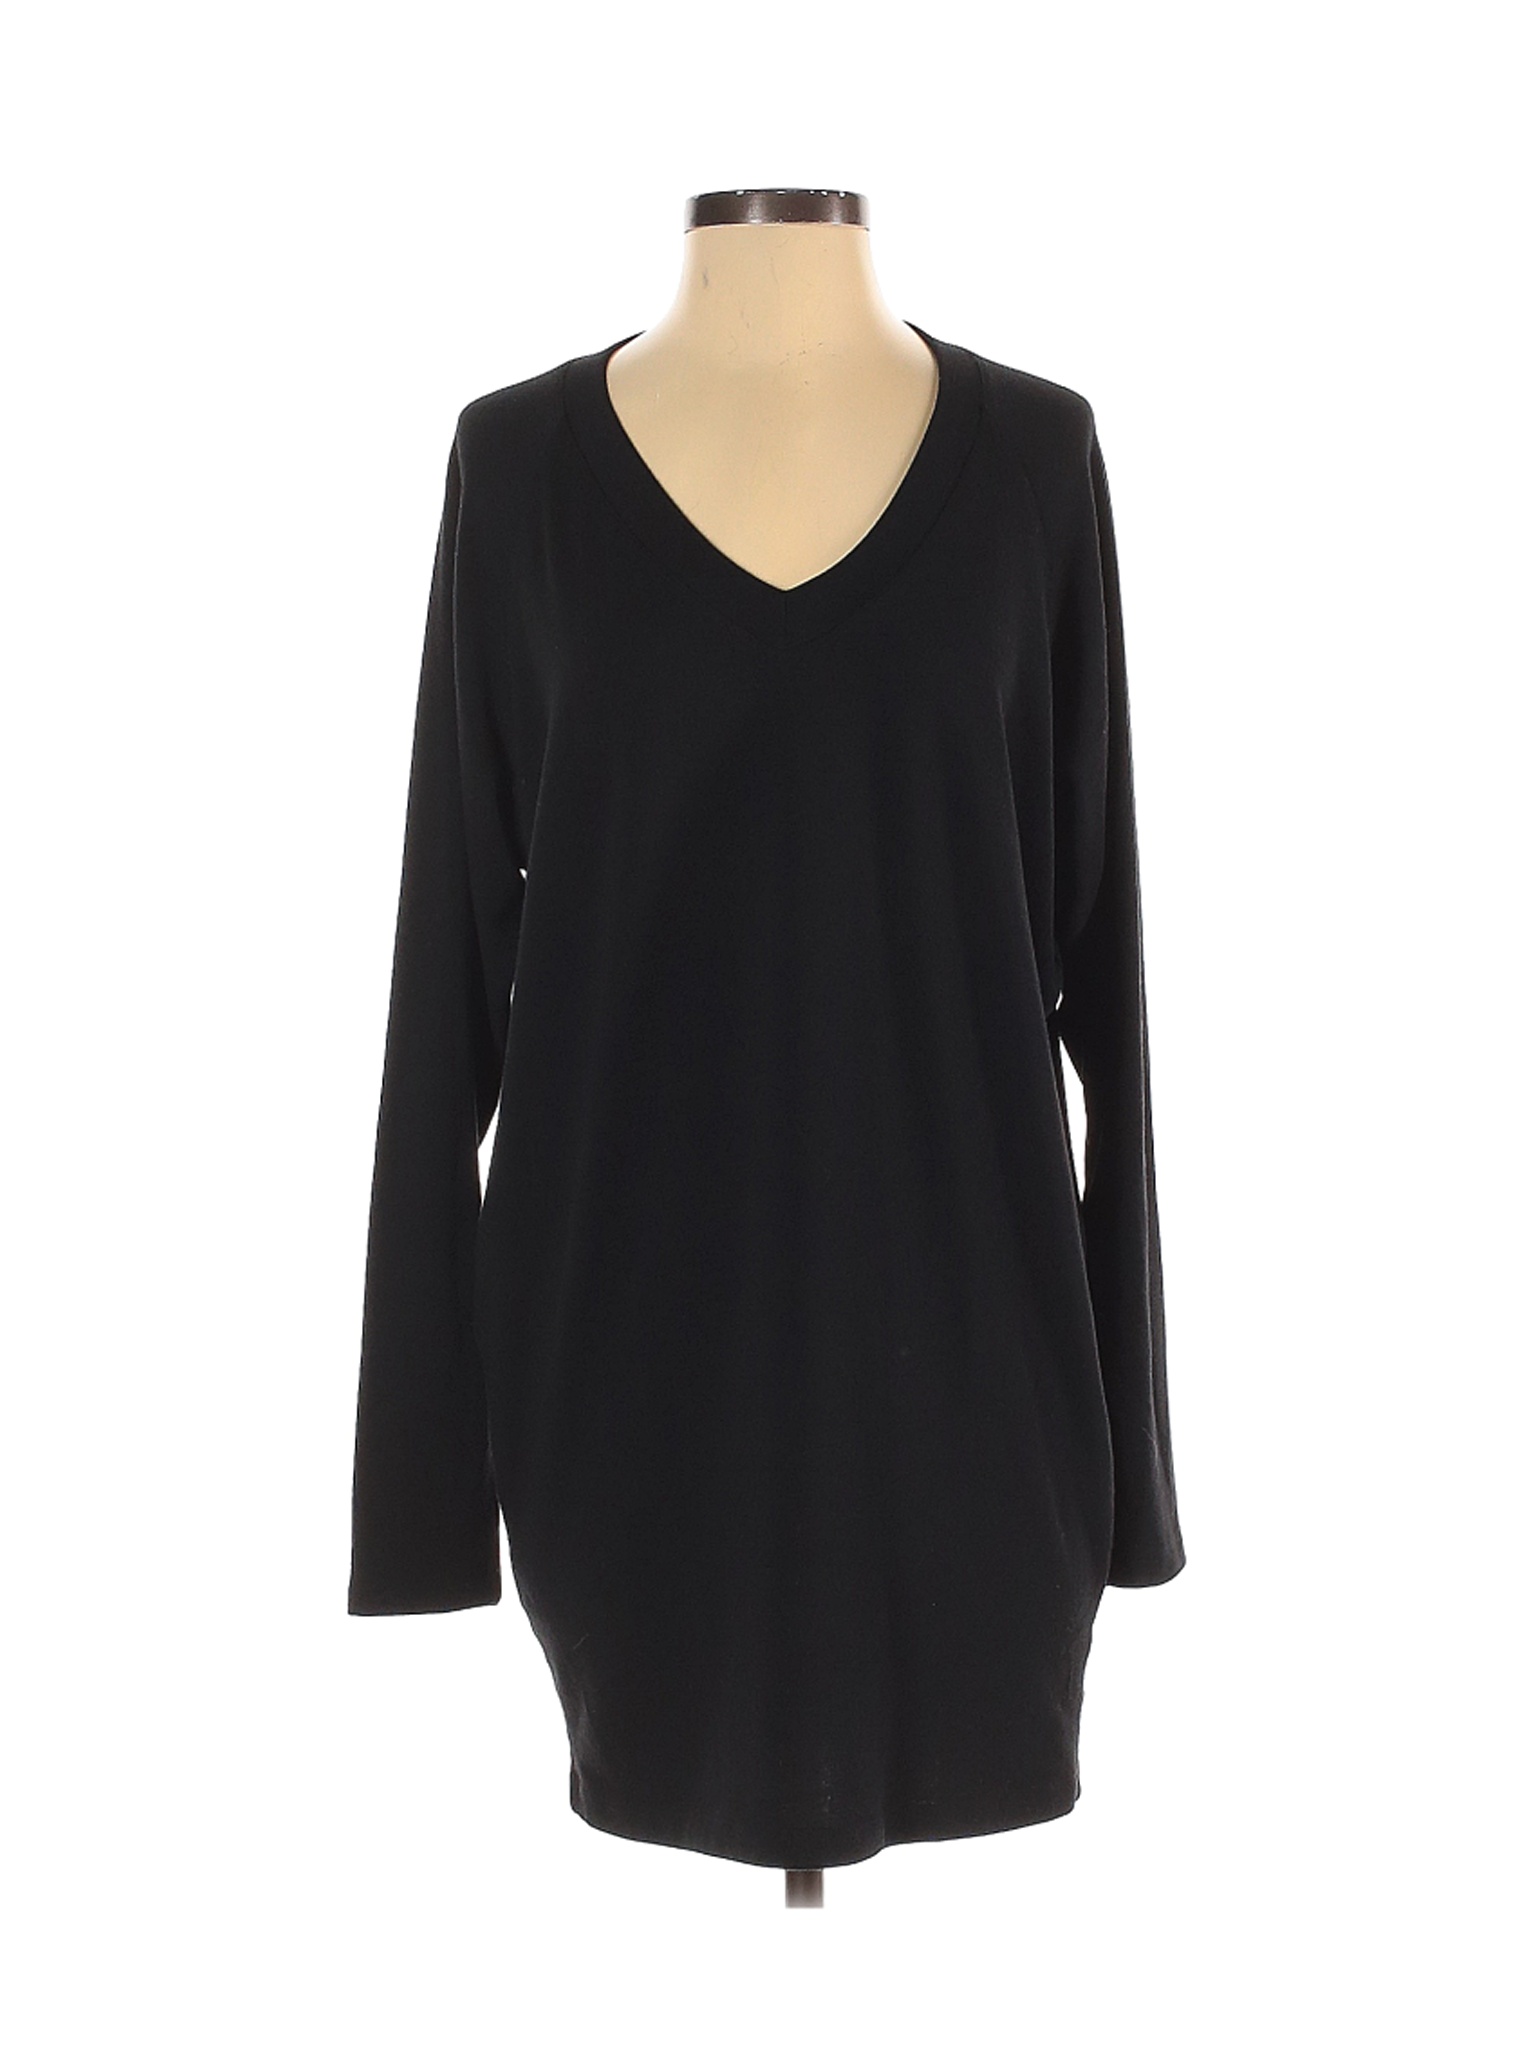 CAbi Women Black Casual Dress S | eBay